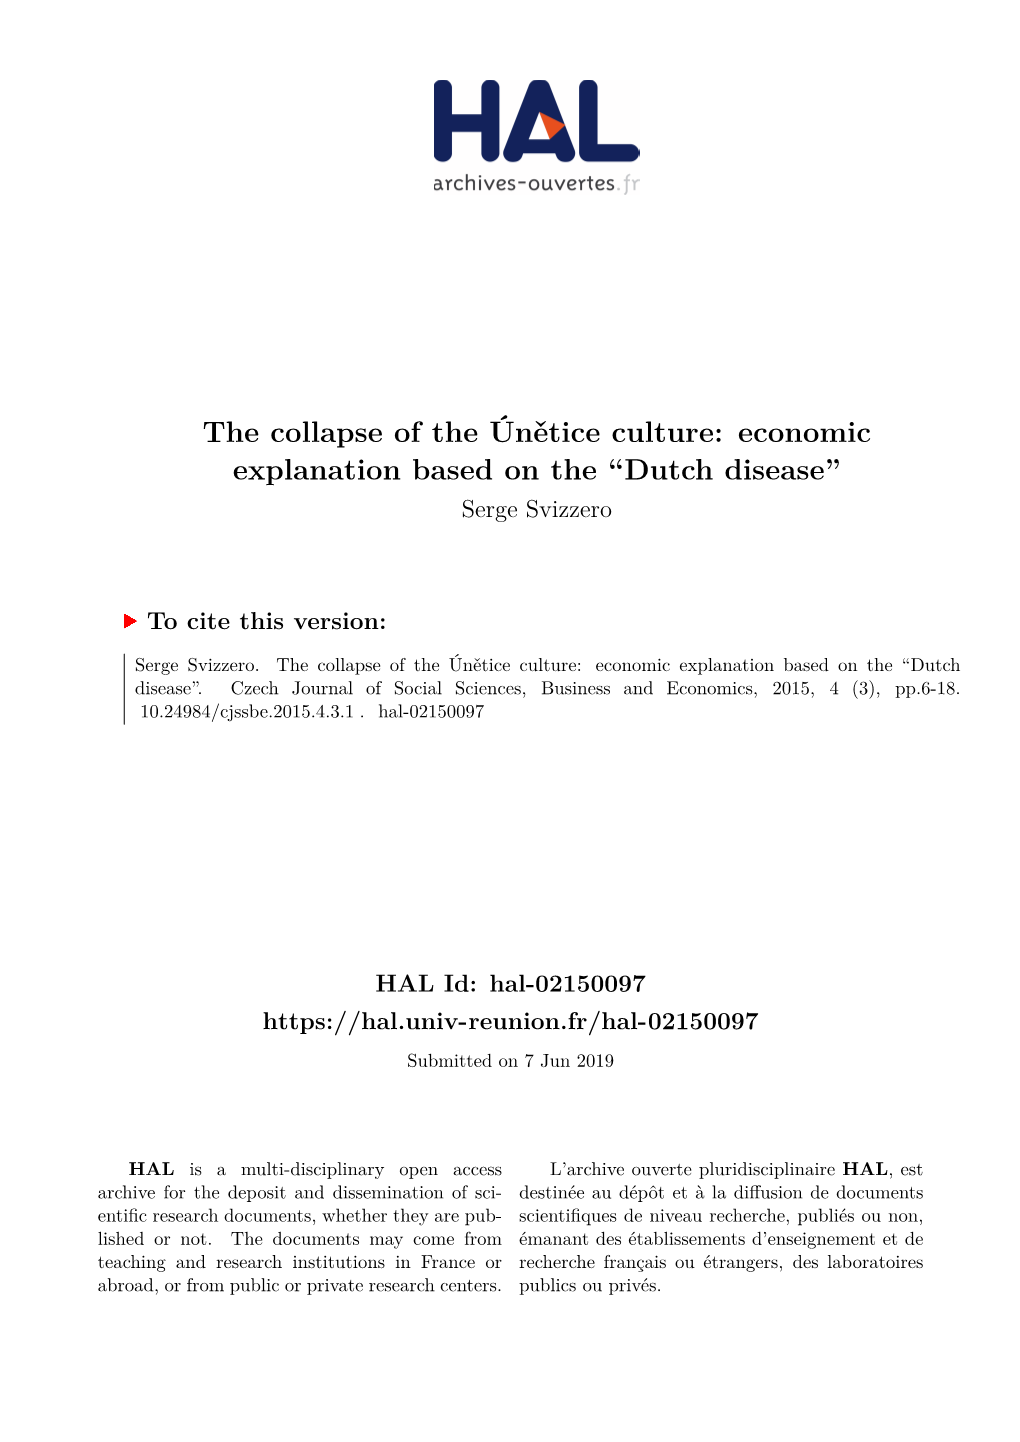 The Collapse of the Únětice Culture: Economic Explanation Based on the “Dutch Disease” Serge Svizzero